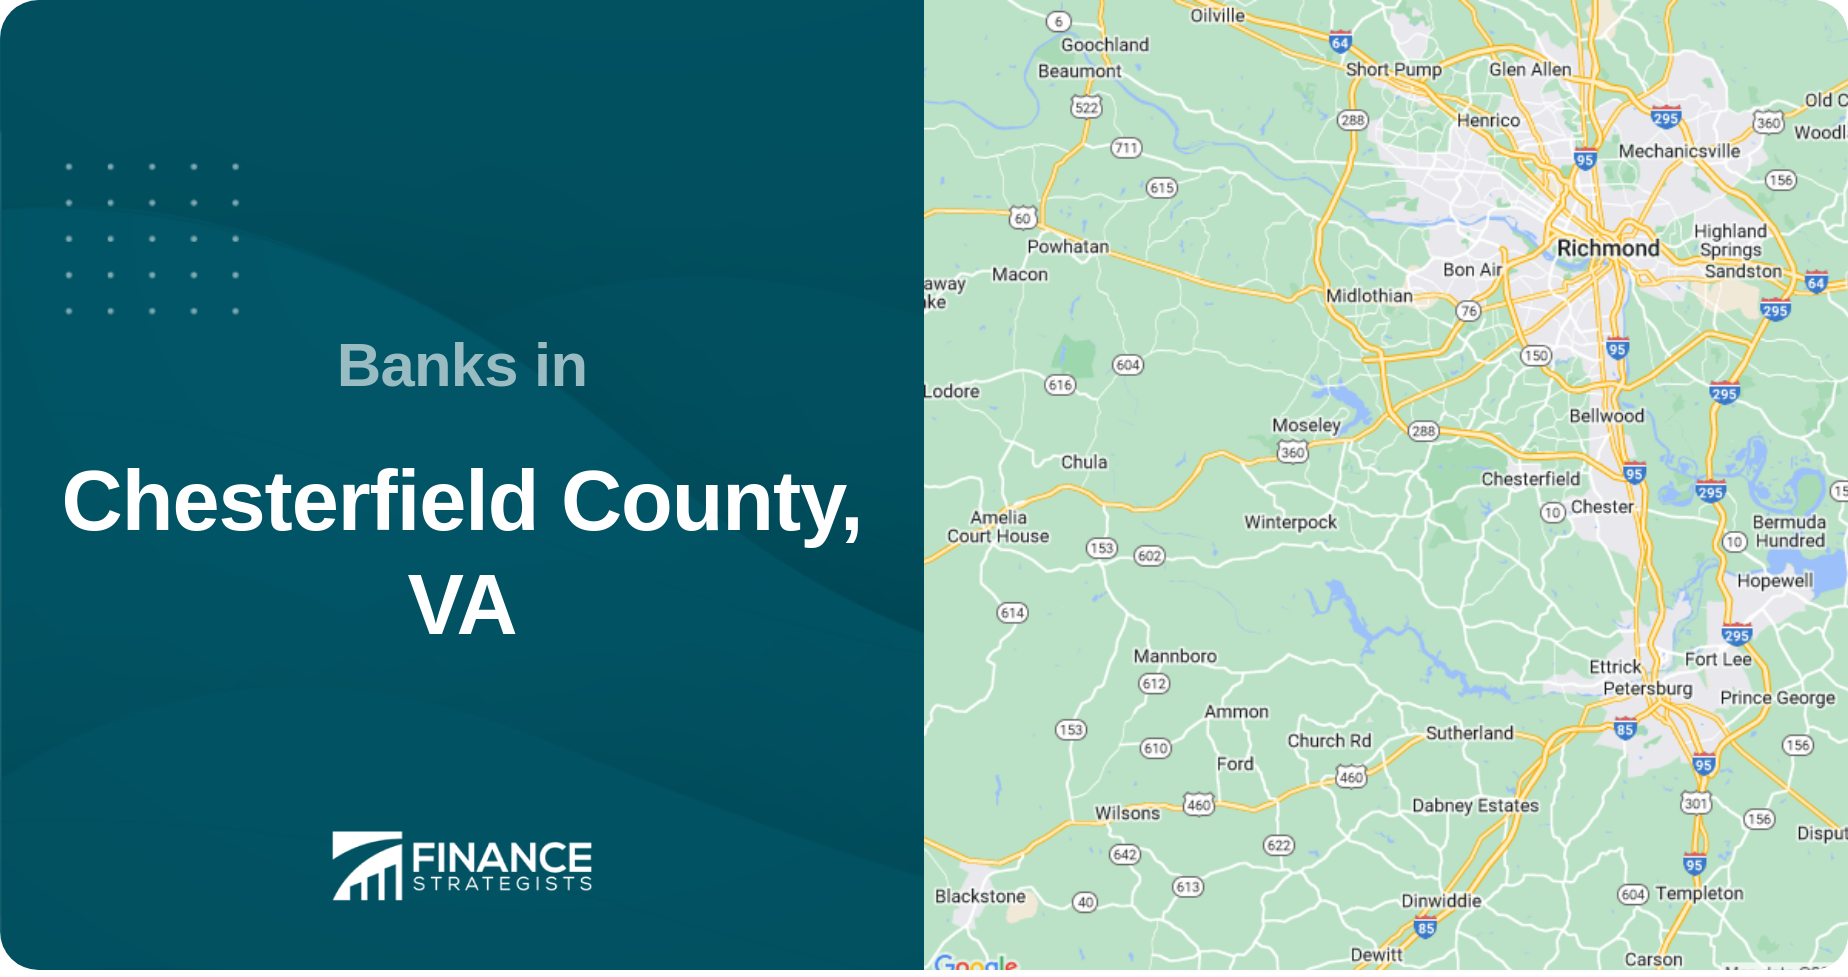 Banks in Chesterfield County, VA